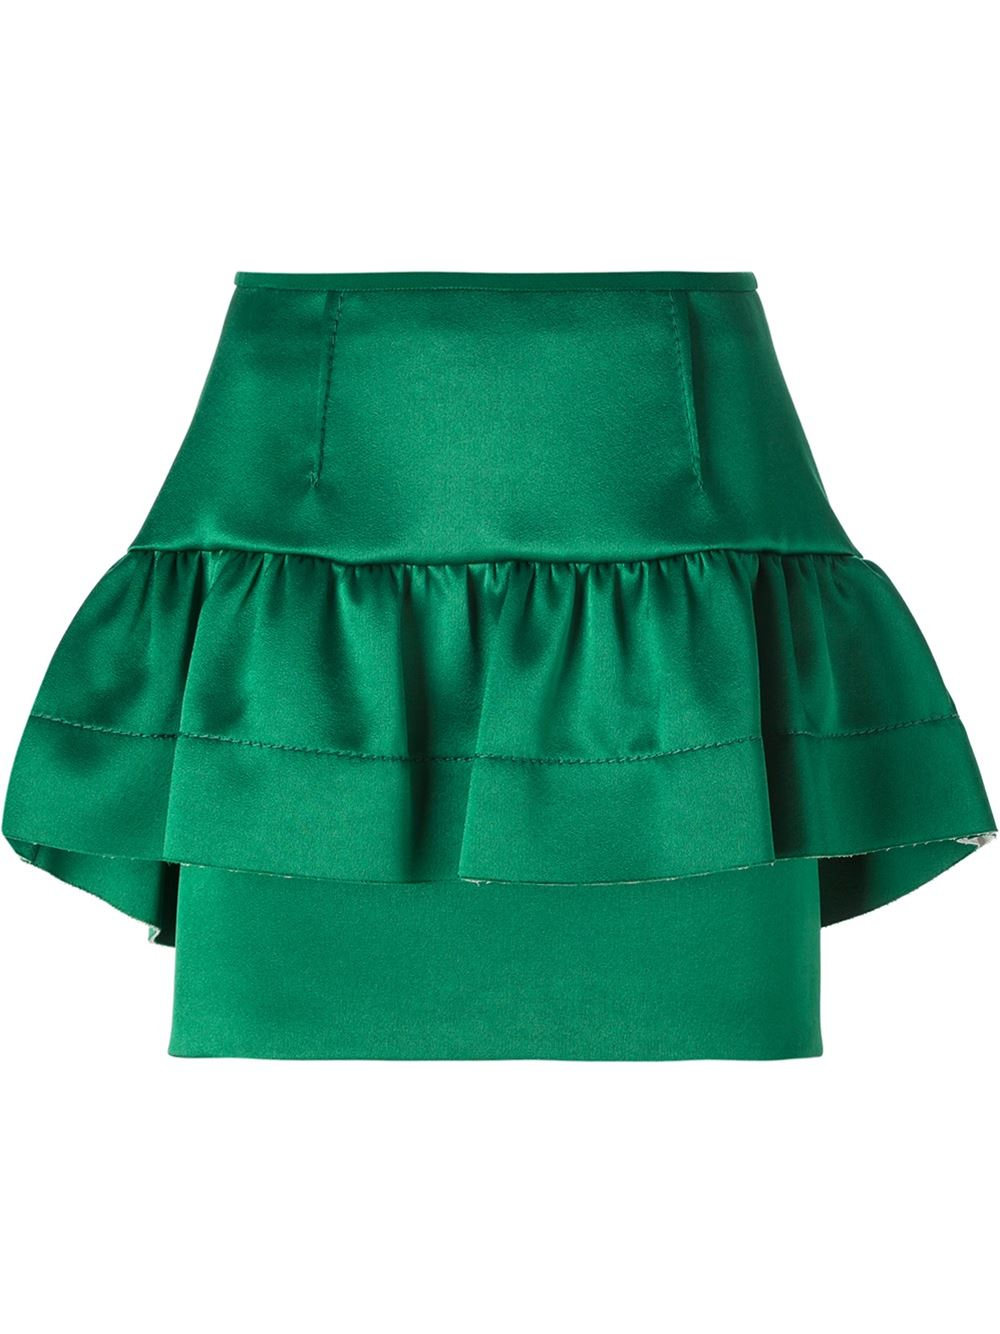 Marni Ruffled Skirt in Green | Lyst